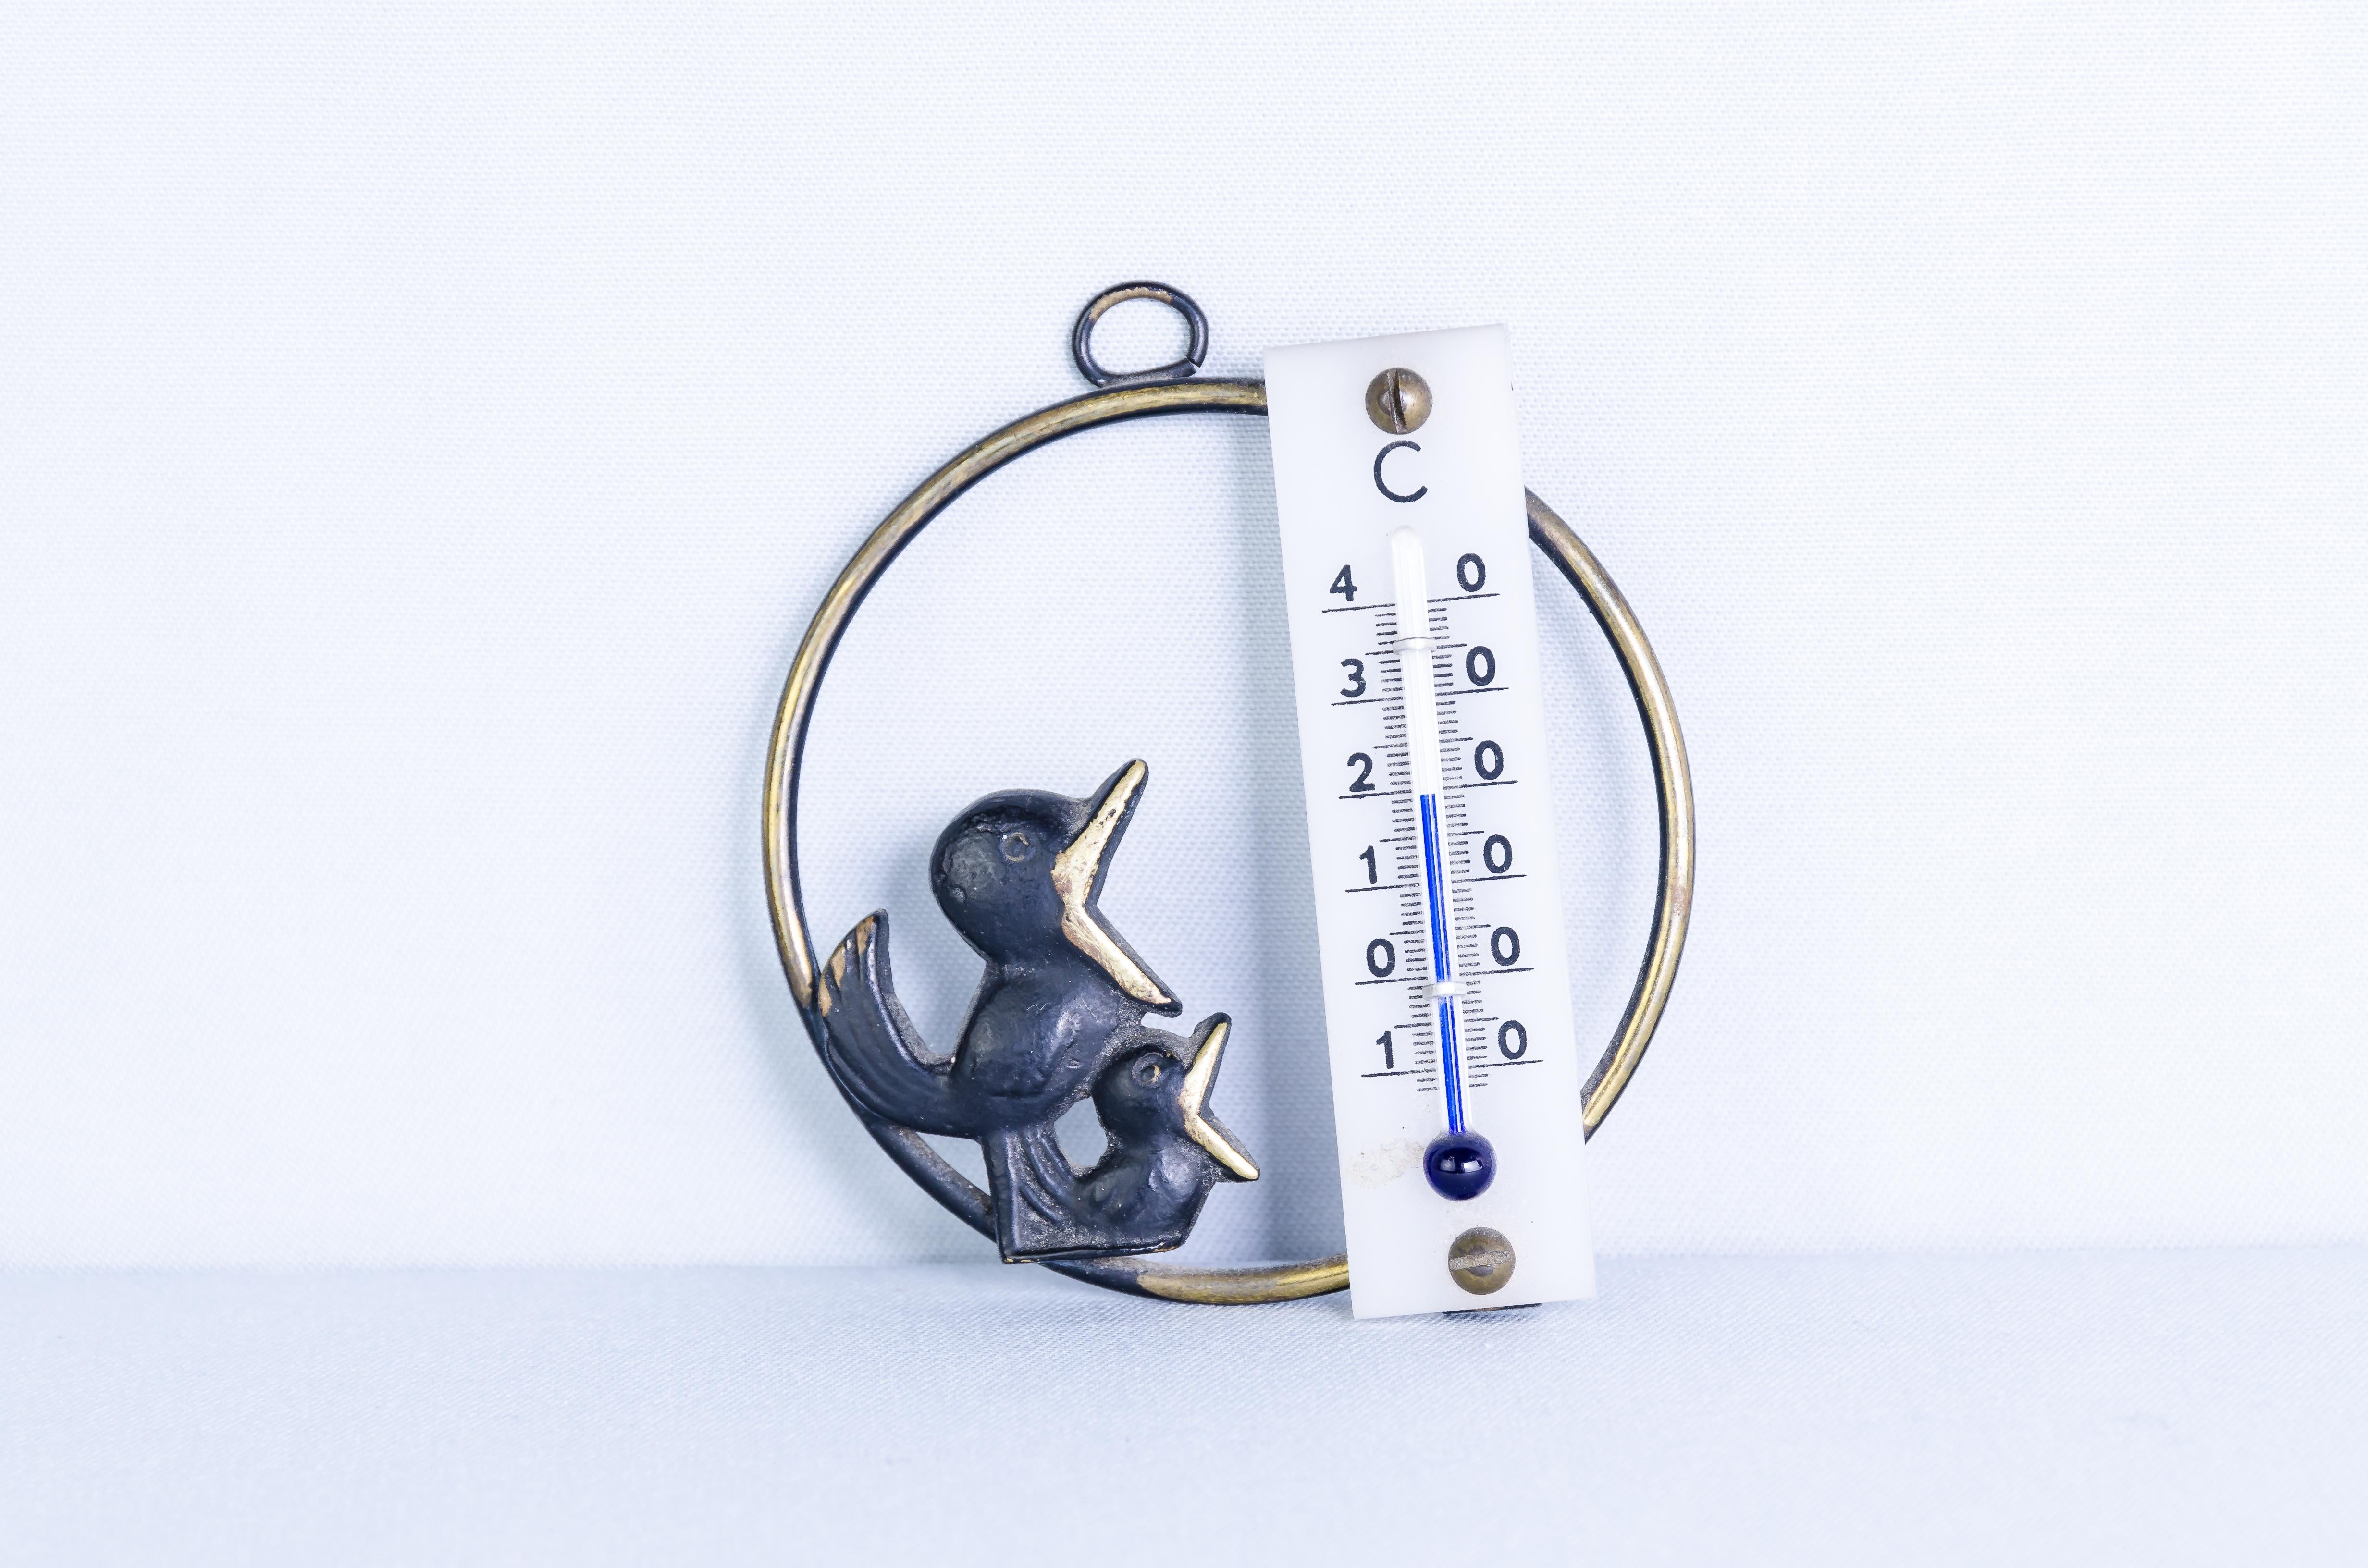 Thermometer by Walter Bosse, circa 1950s
Original condition.